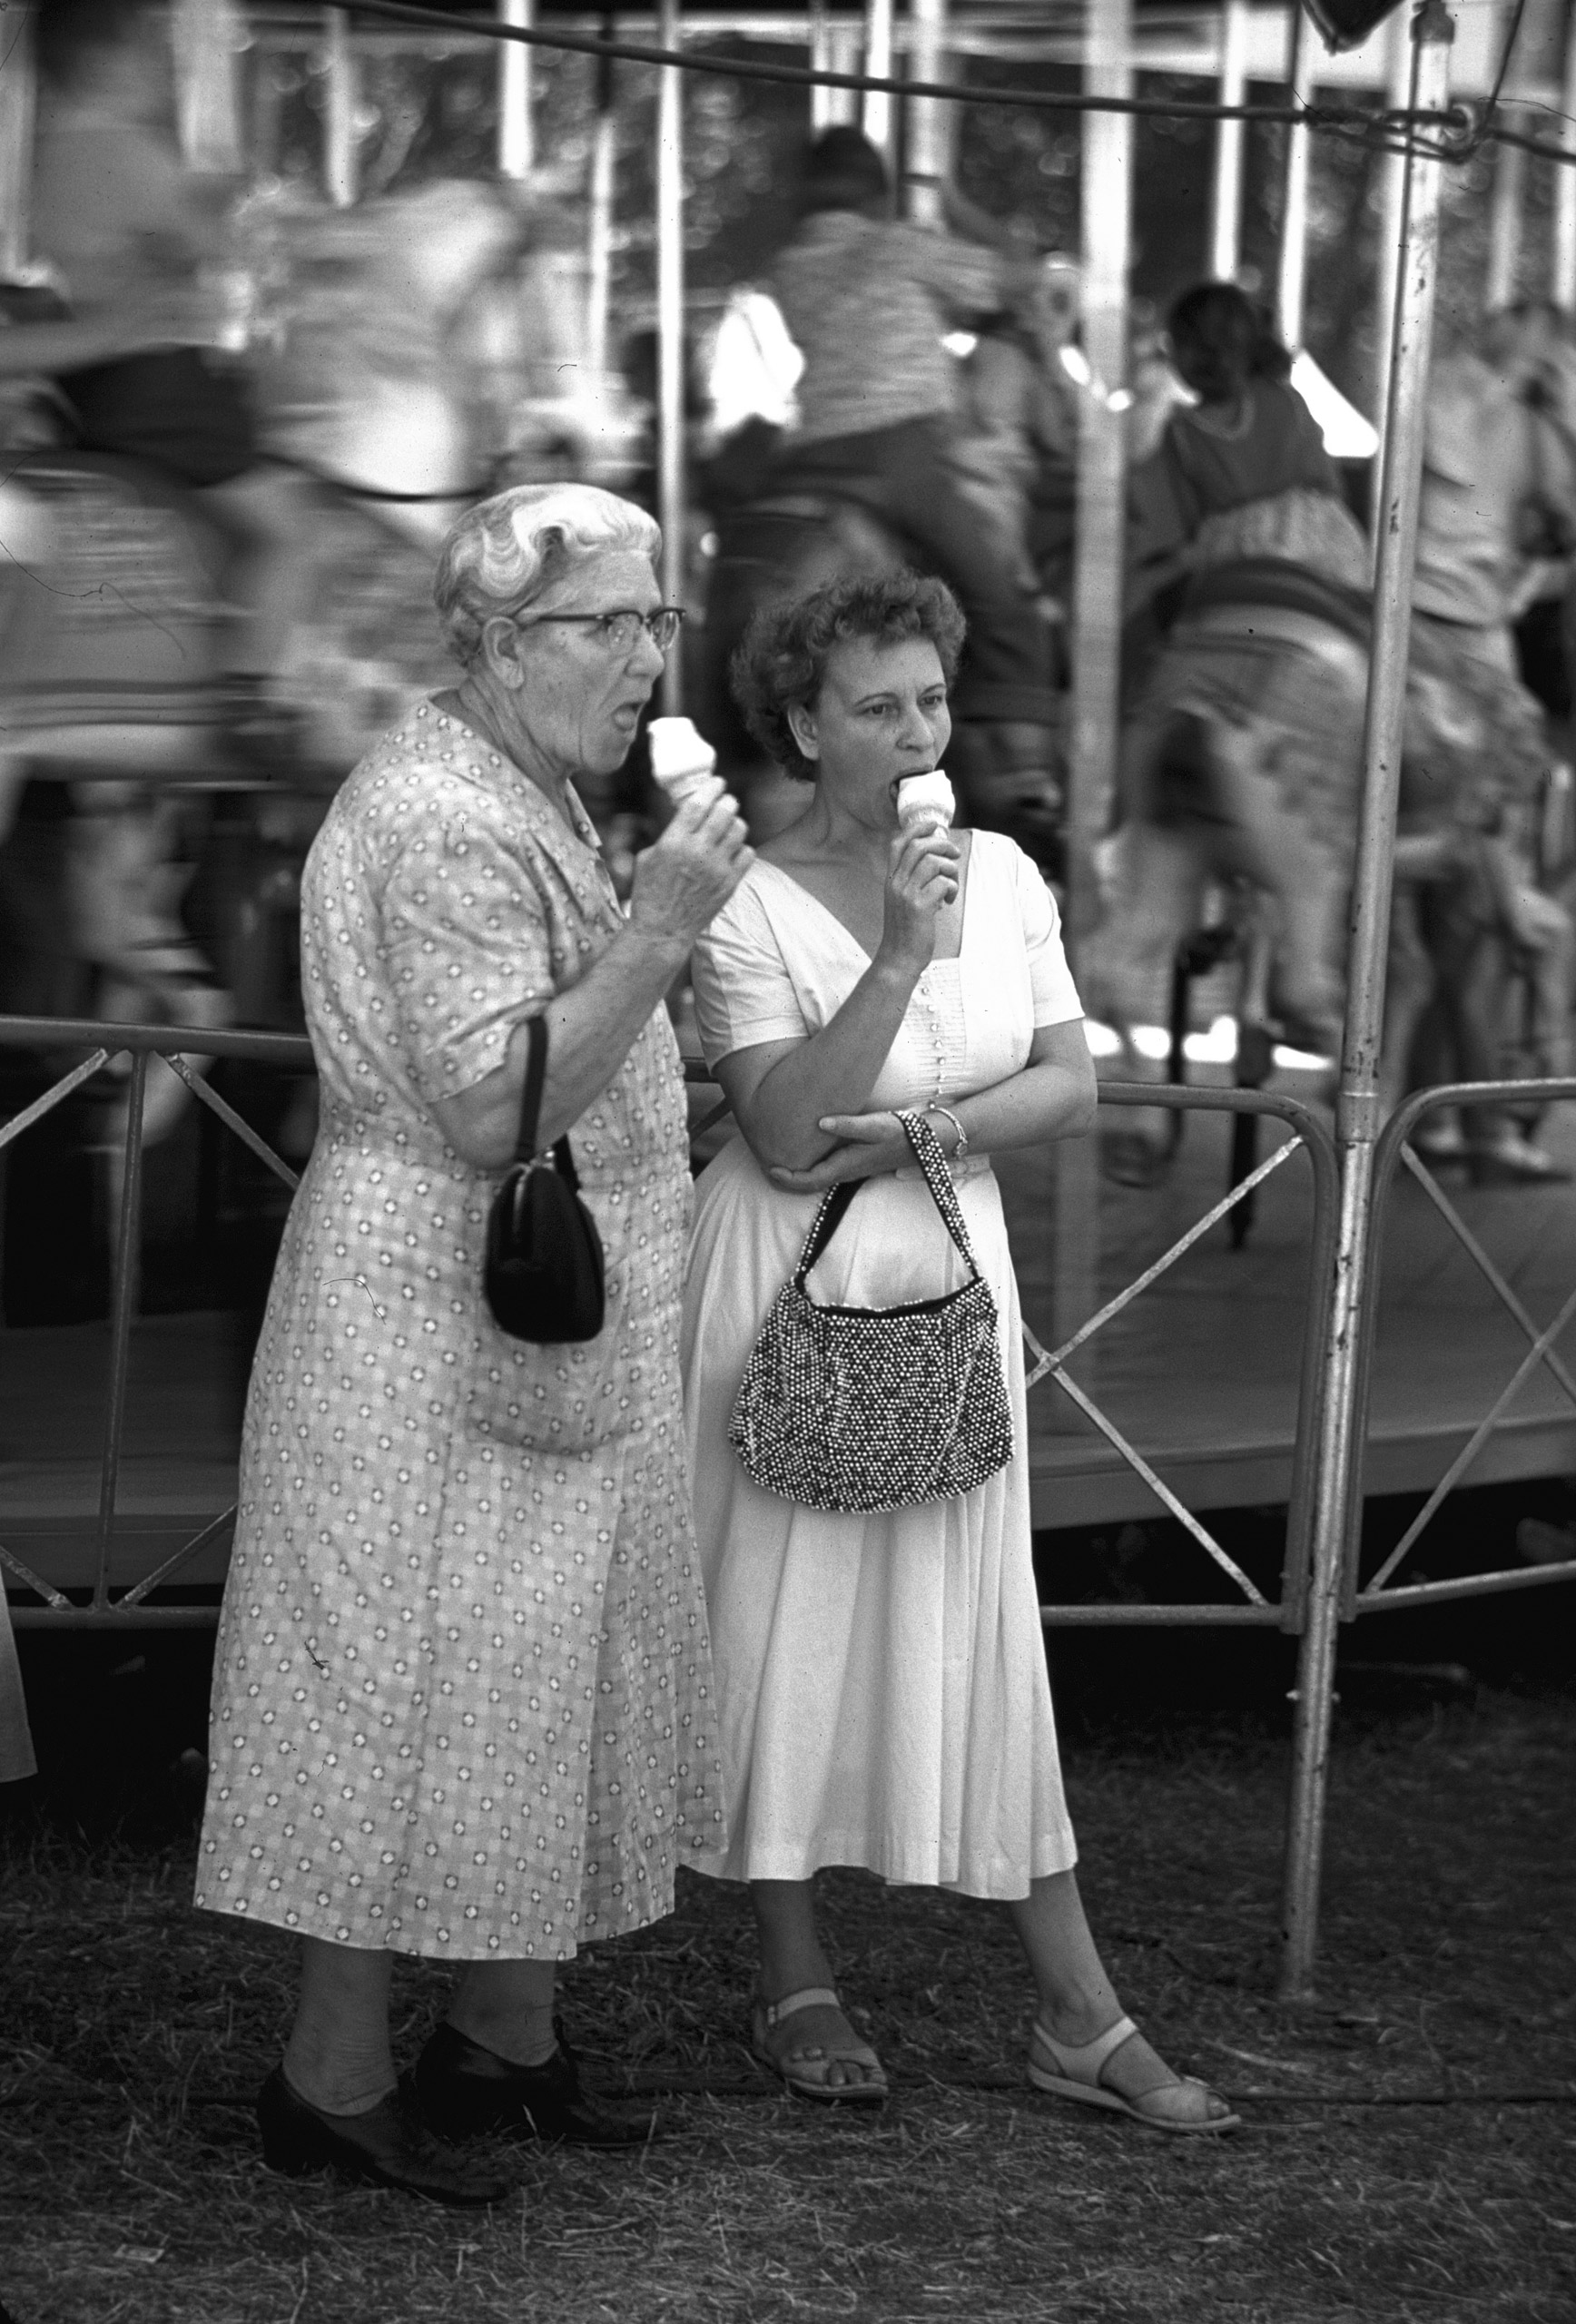 Two women enjoying ice cream cones at Iowa State Fair, 1955.